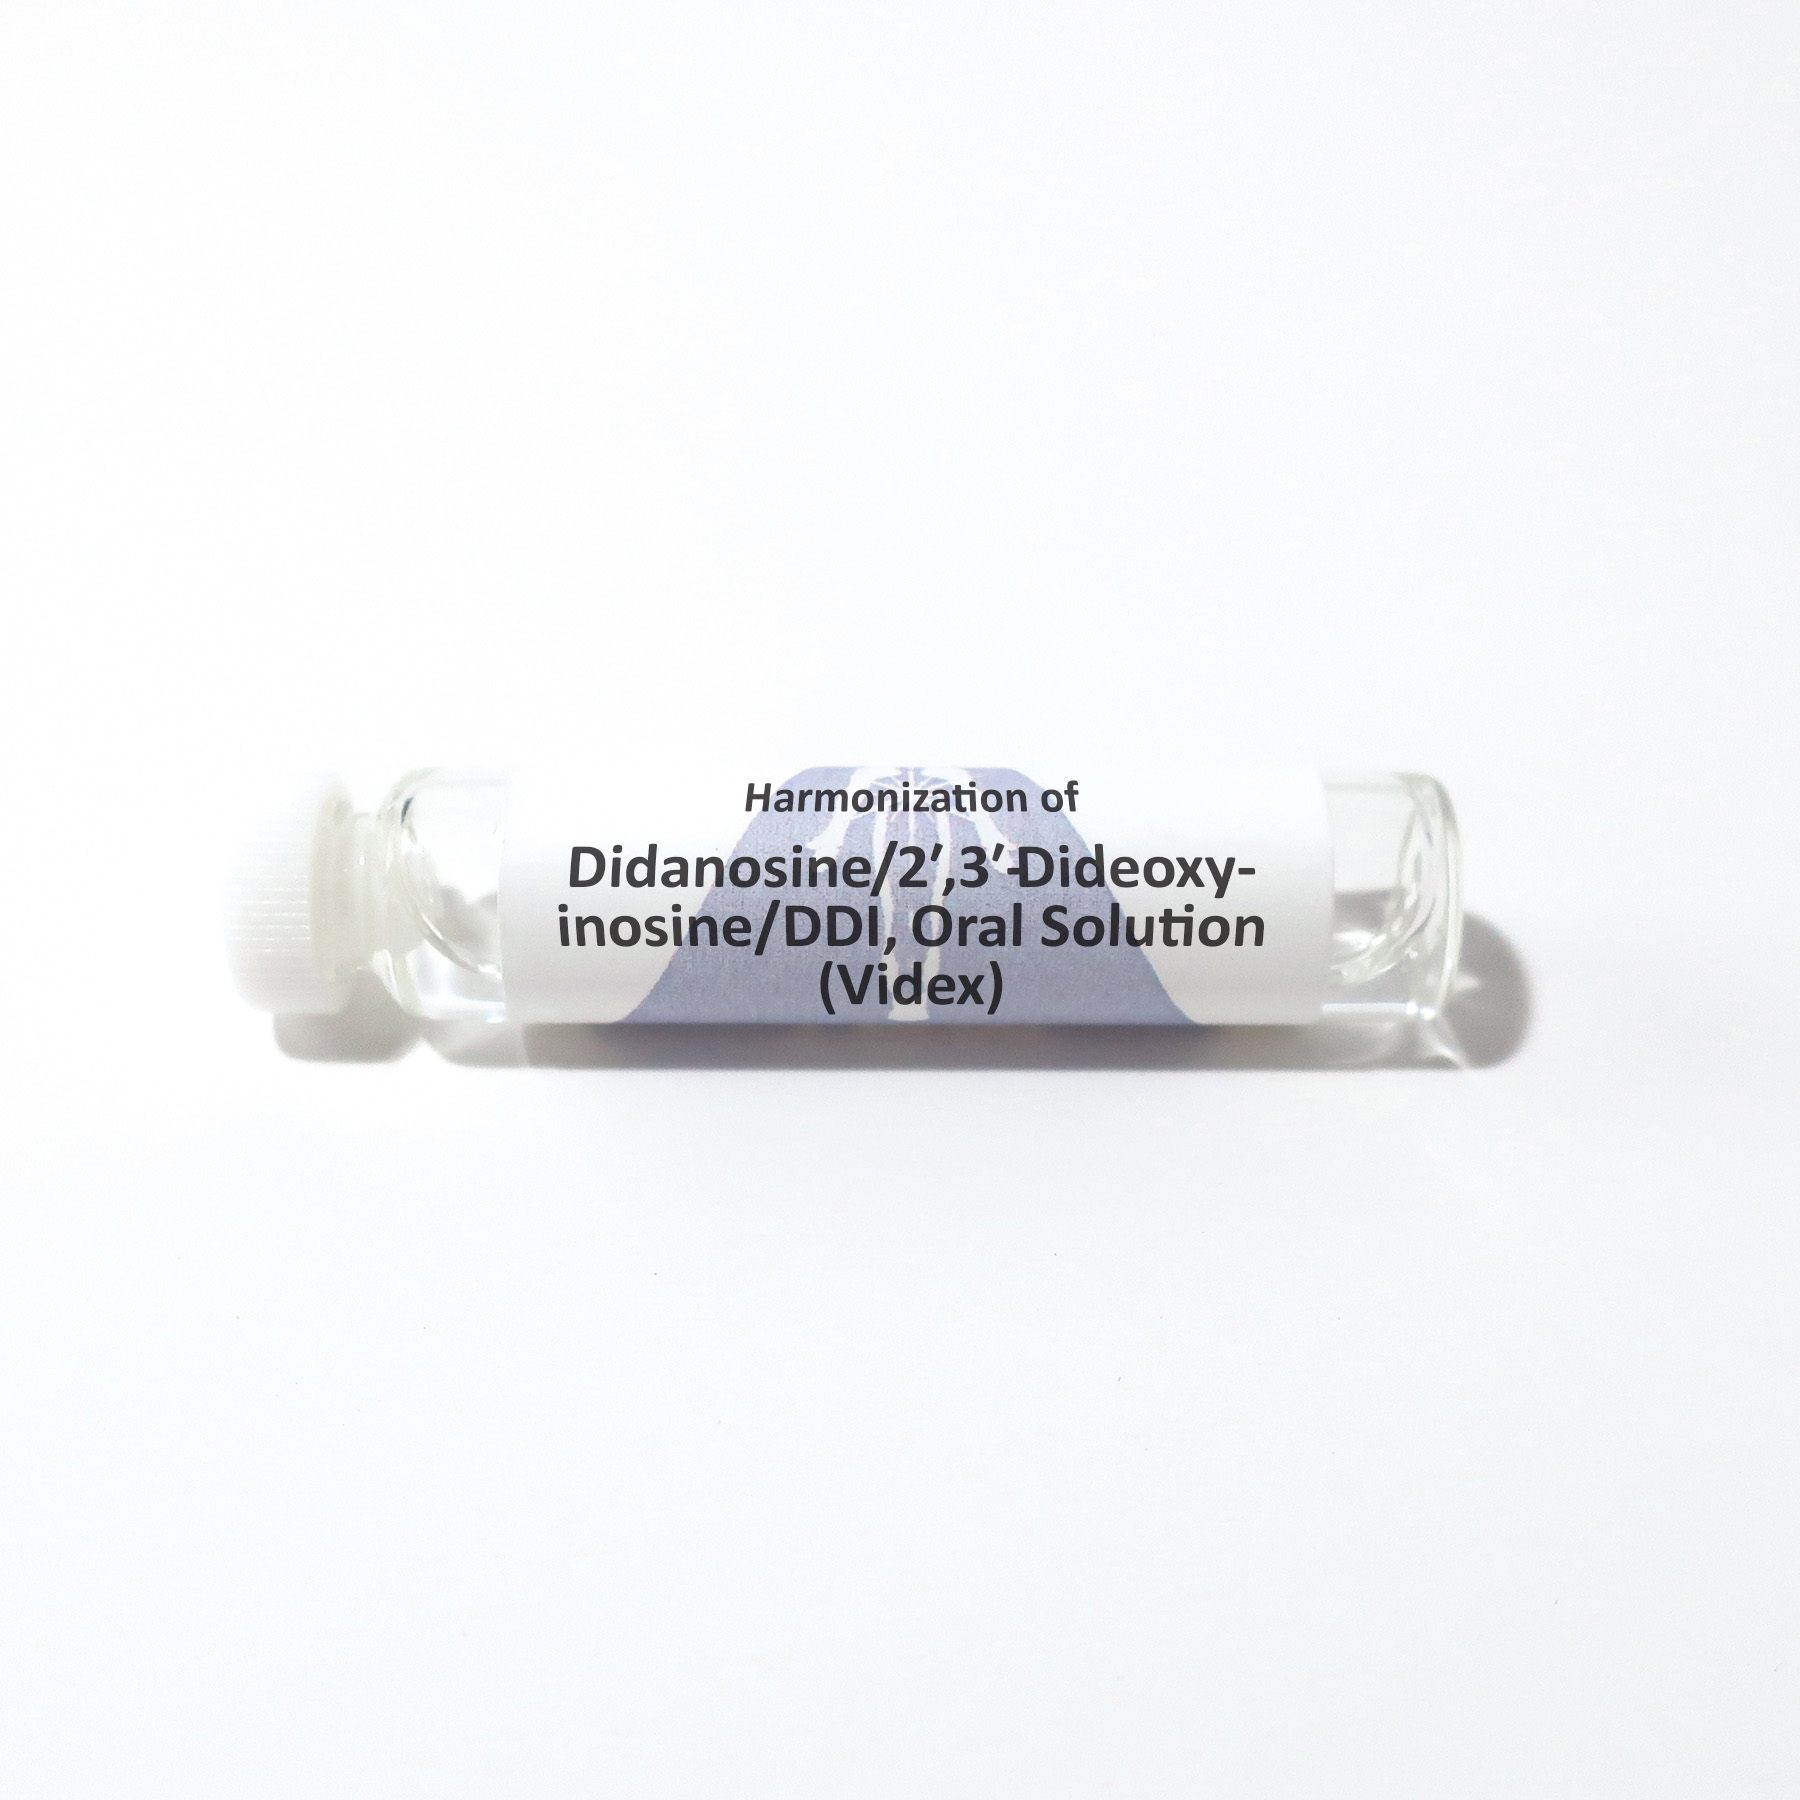 Didanosine/2′,3′-Dideoxyinosine/DDI, Oral Solution (Videx)